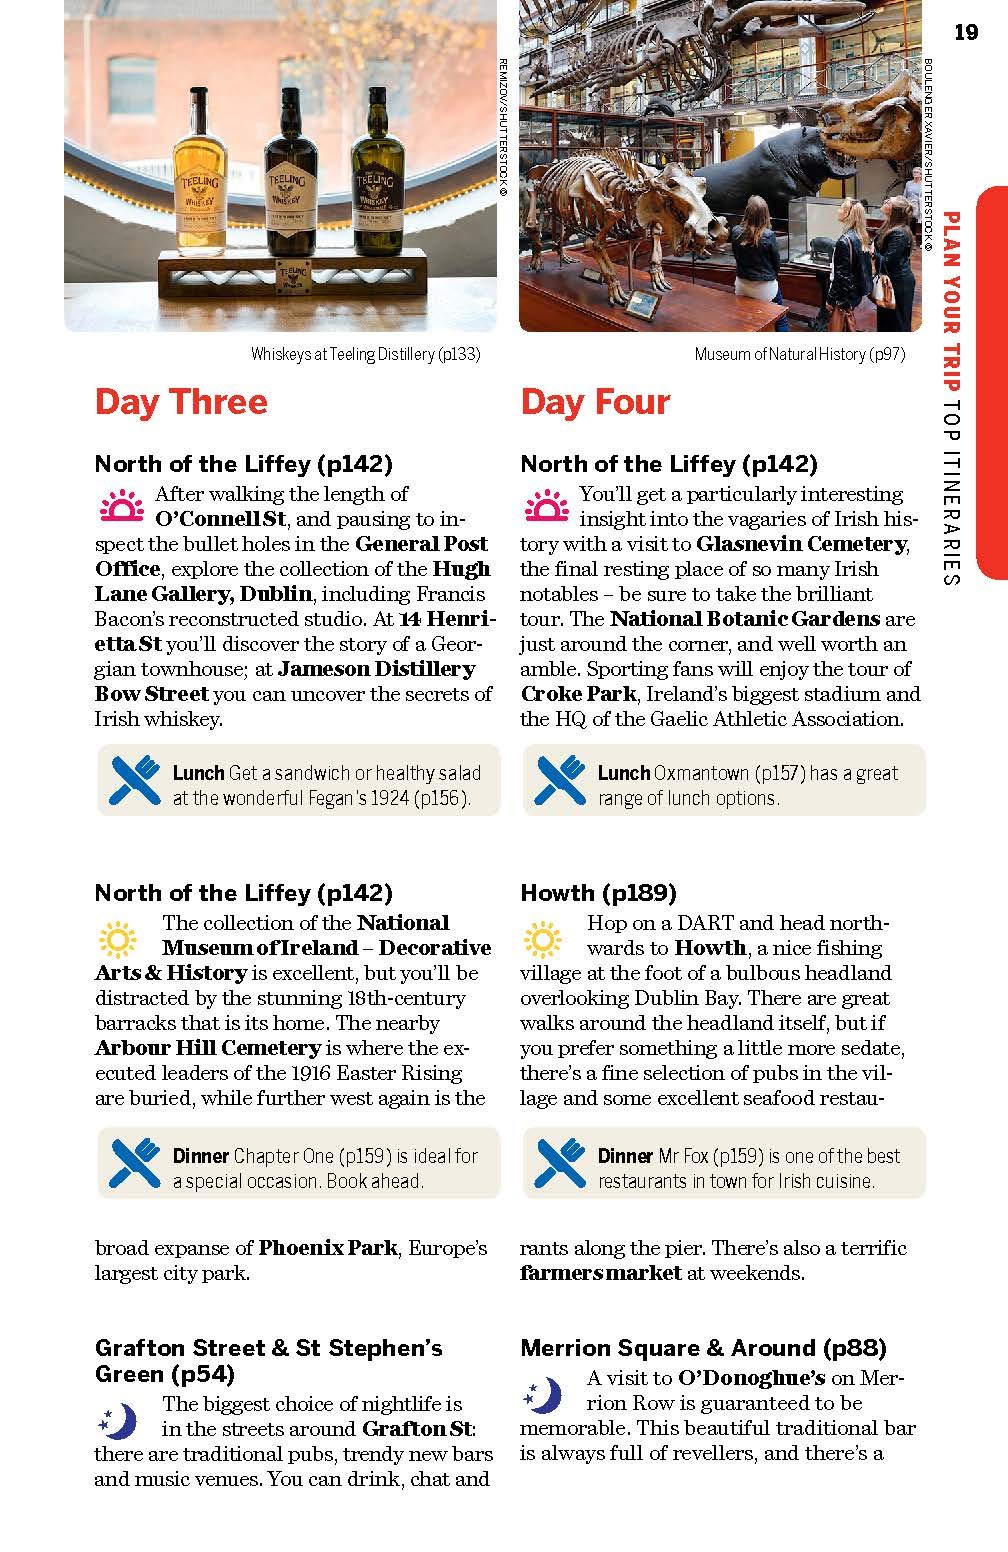 Guide de voyage (en anglais) - Dublin | Lonely Planet guide de voyage Lonely Planet 